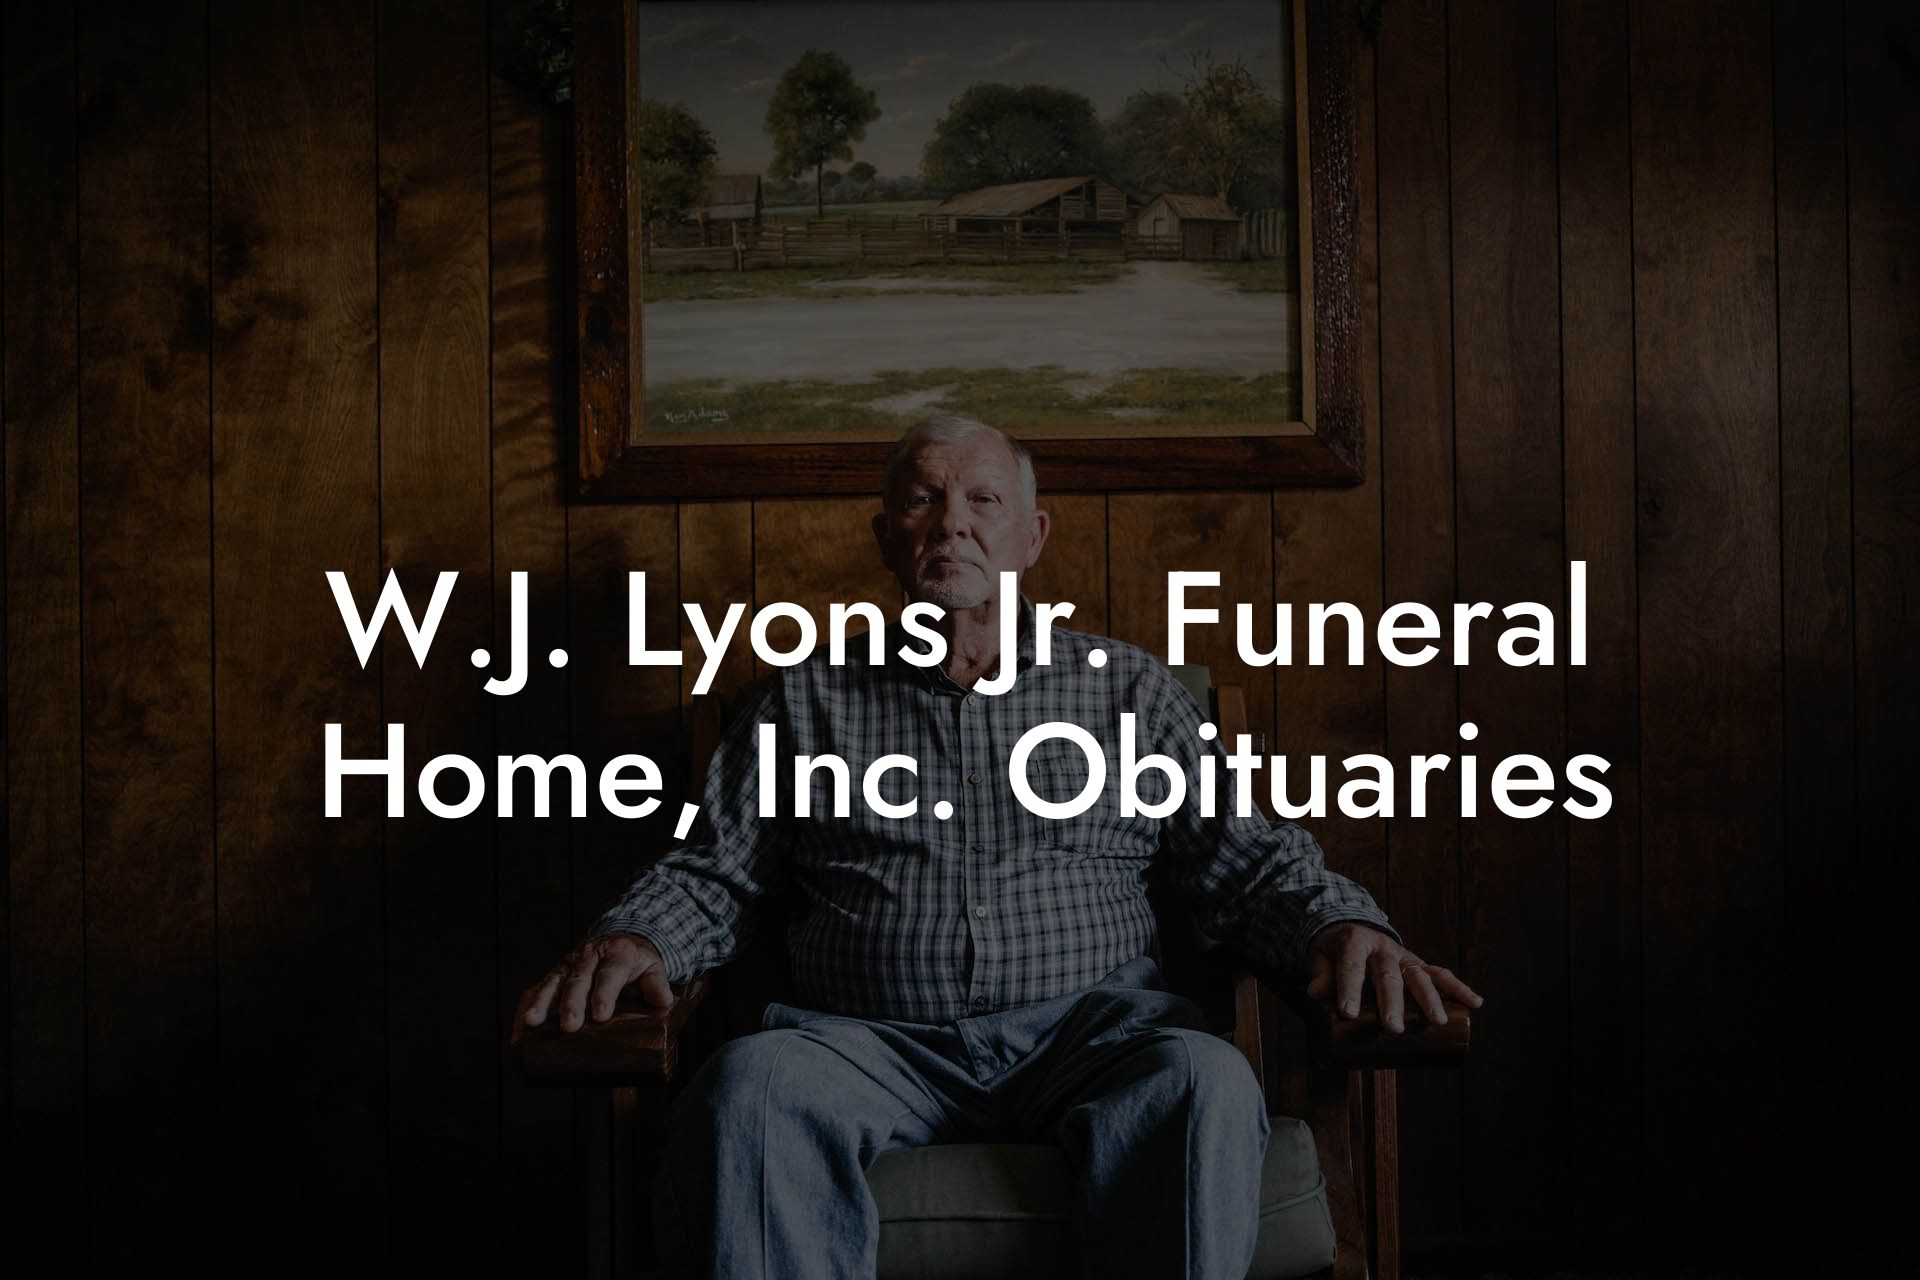 W.J. Lyons Jr. Funeral Home, Inc. Obituaries